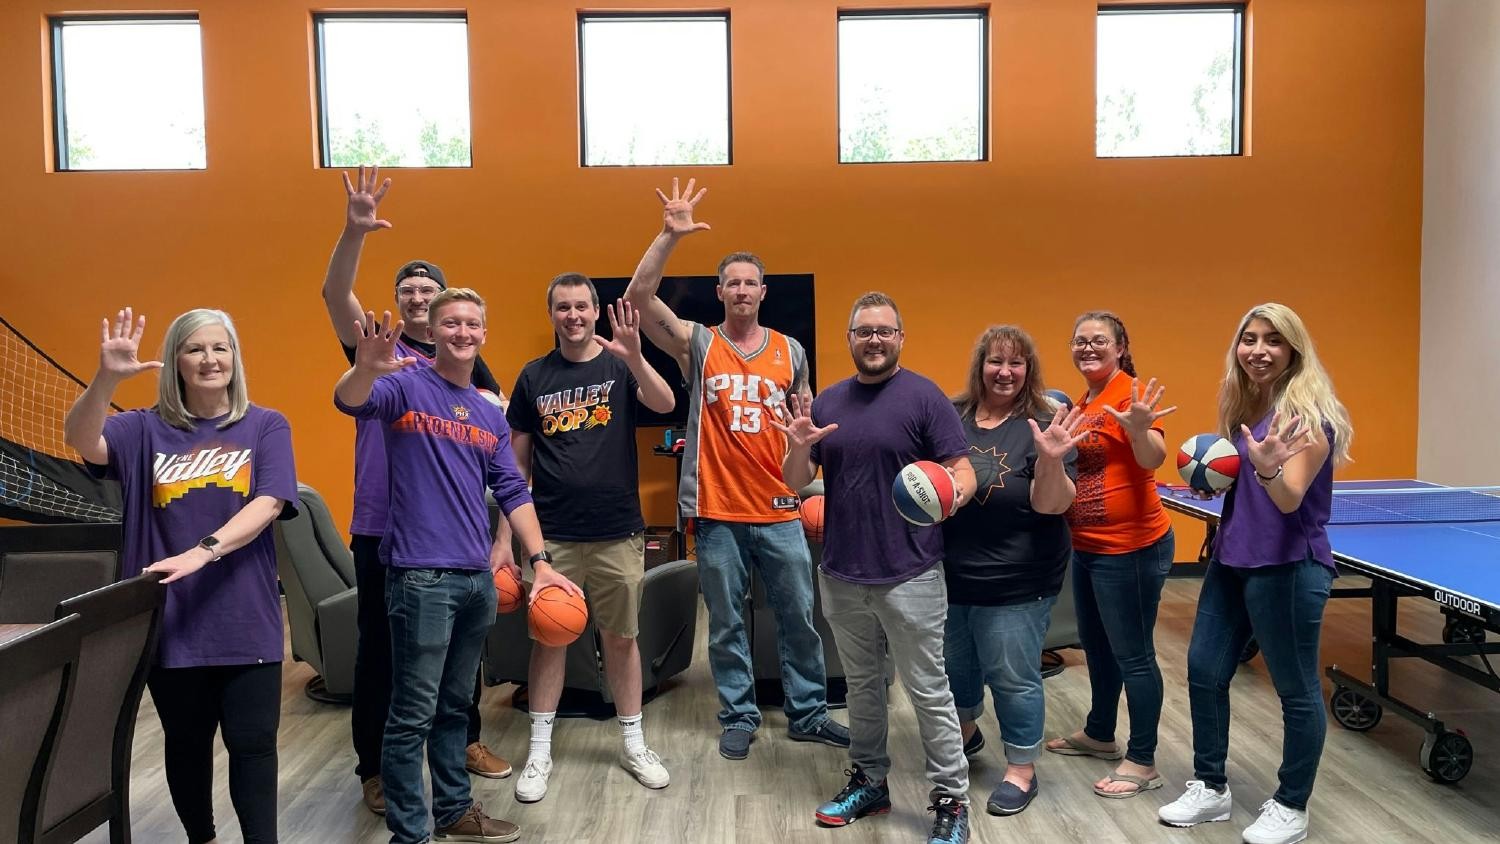 Our resident Suns Basketball Fans celebrating their Phoenix, Arizona pride. 